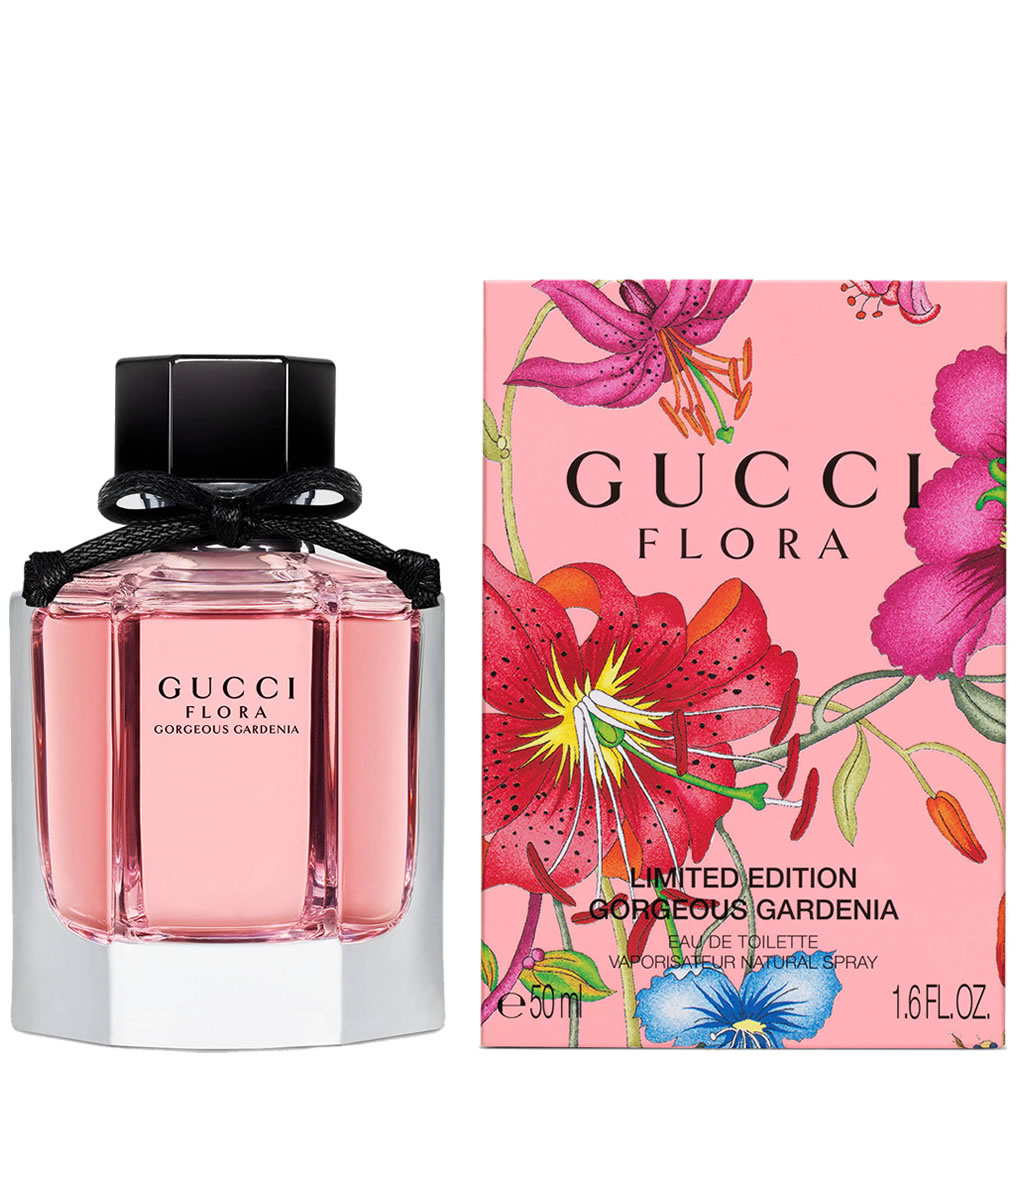 GUCCI FLORA GORGEOUS GARDENIA LIMITED EDITION EDT FOR WOMEN nước hoa việt  nam Perfume Vietnam